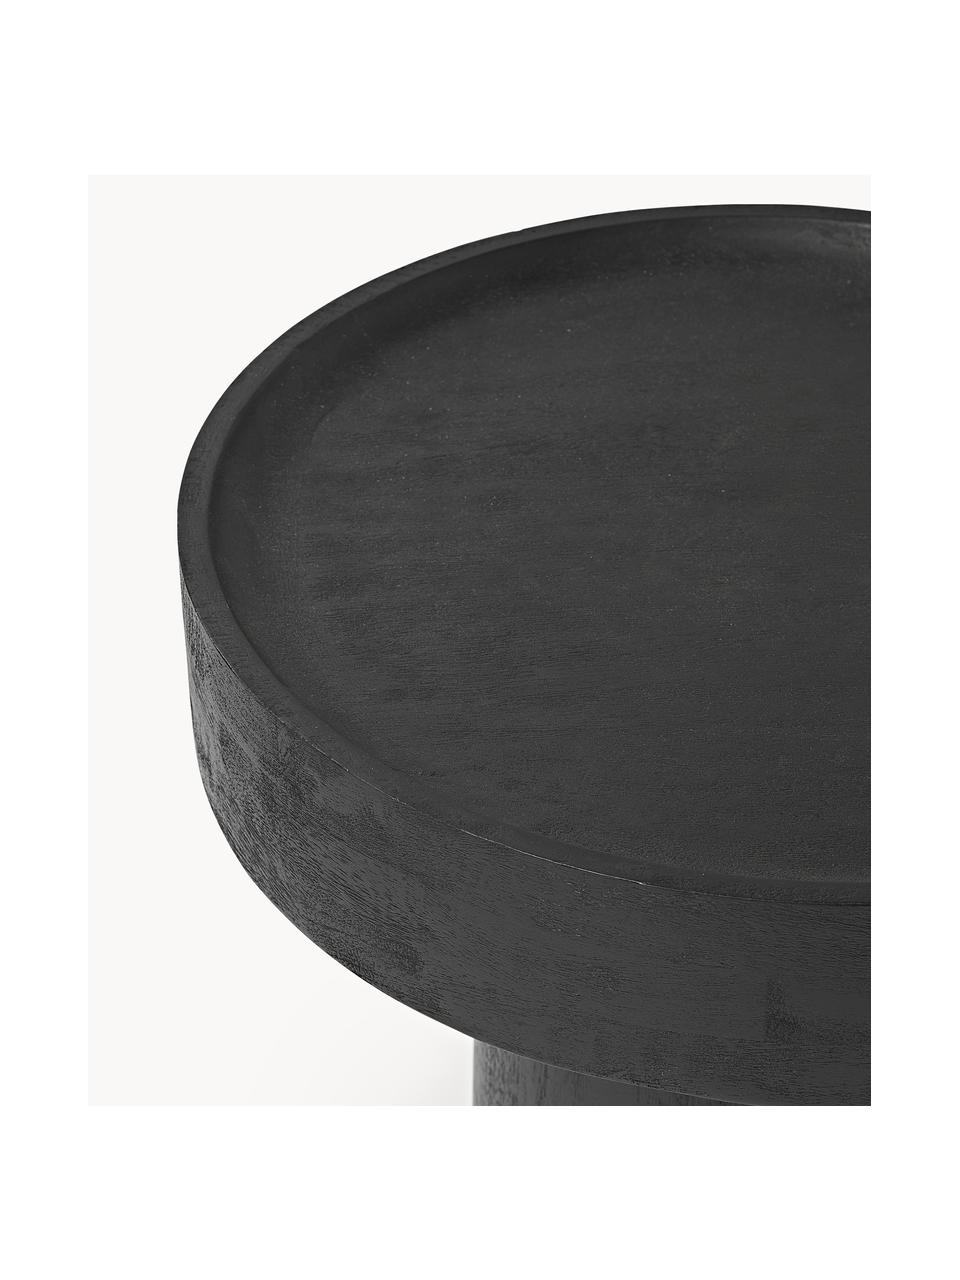 Beistelltisch Benno aus Mangoholz, Massives Mangoholz, lackiert, Beton, Mangoholz, schwarz lackiert, Ø 50 x H 50 cm